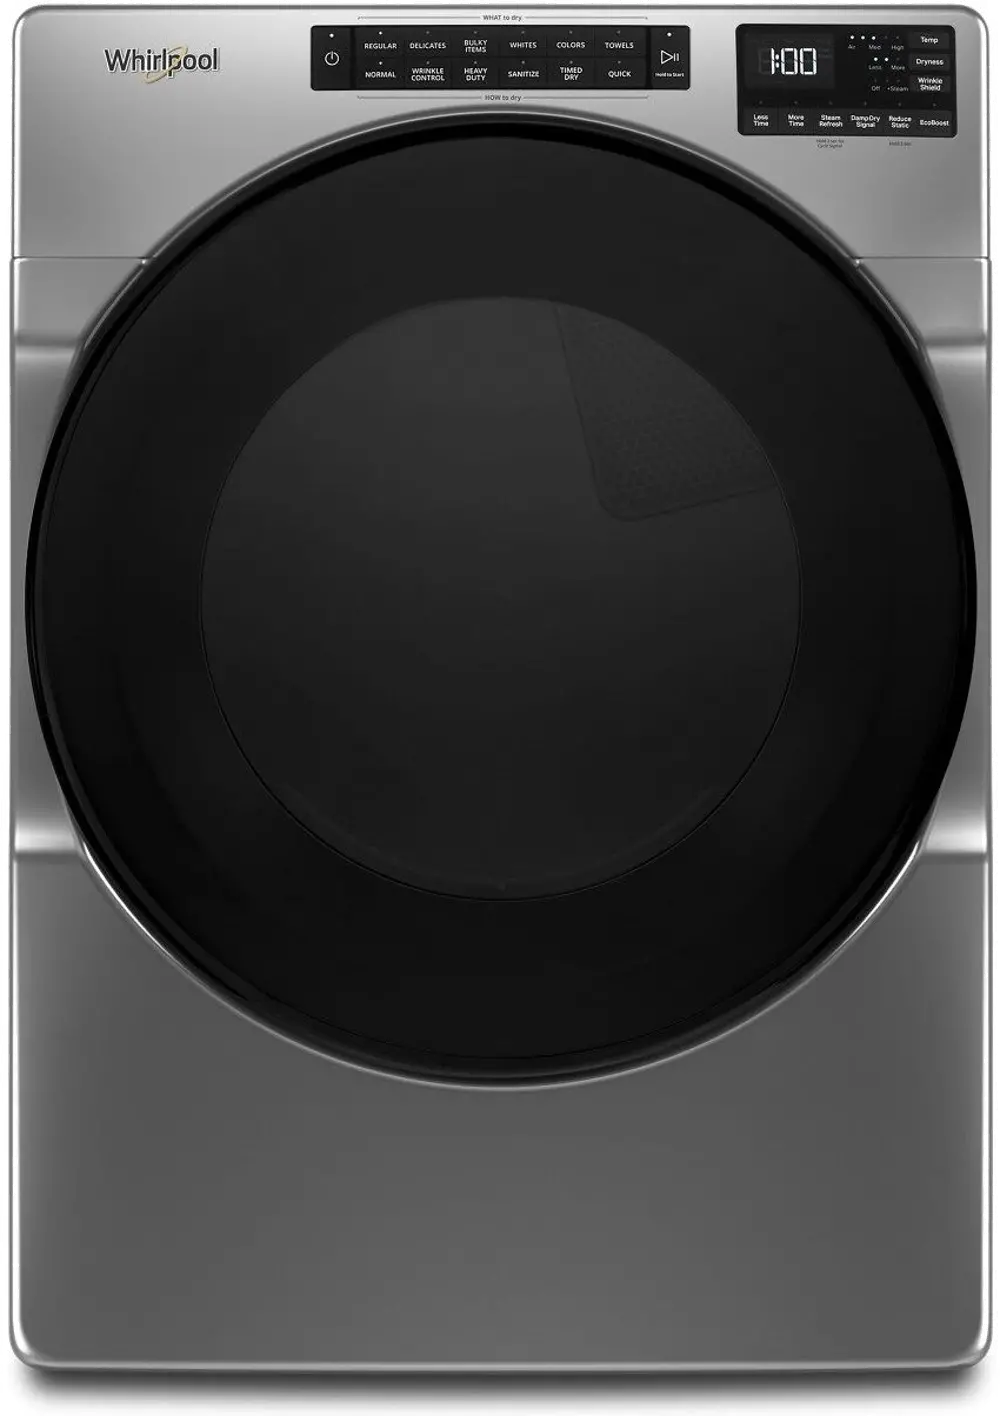 WED6605MC Whirlpool 7.4 cu ft Electric Dryer - Chrome Shadow W6605-1